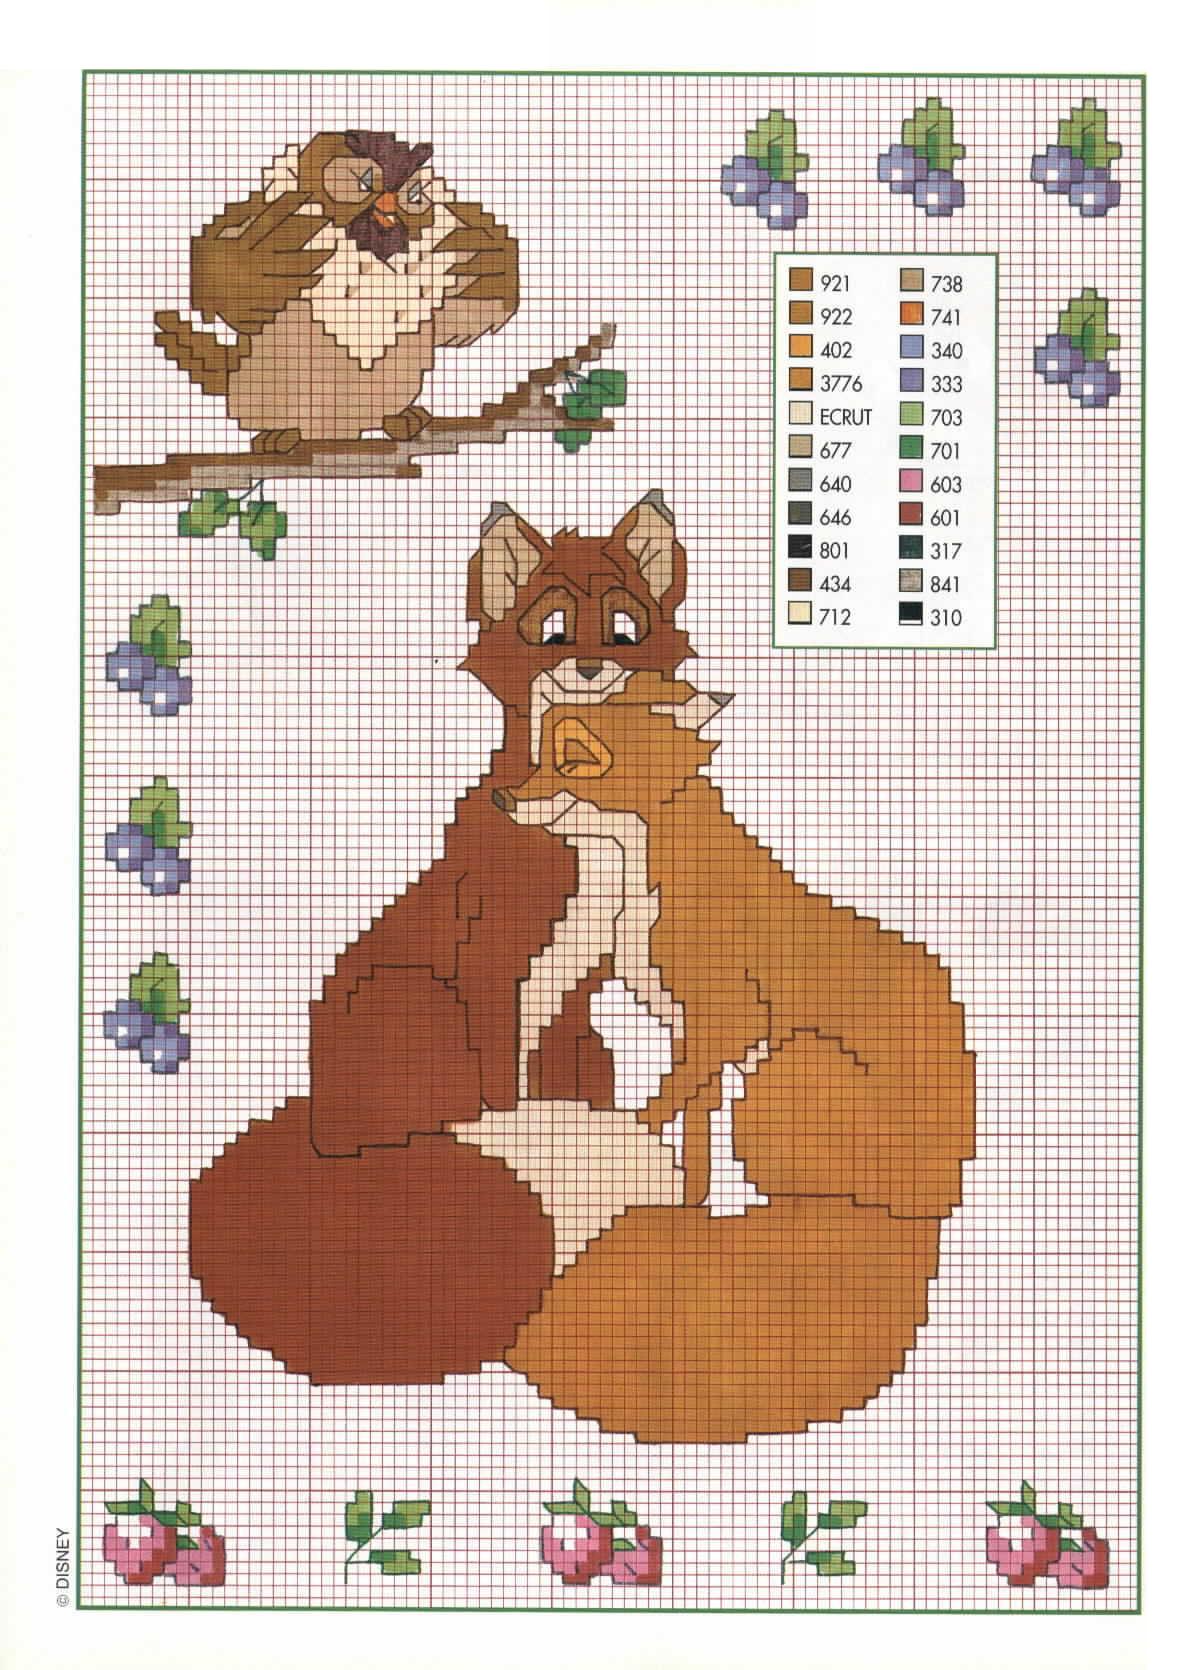 Cross stitch pattern of The Fox and the Hound Walt Disney (3)